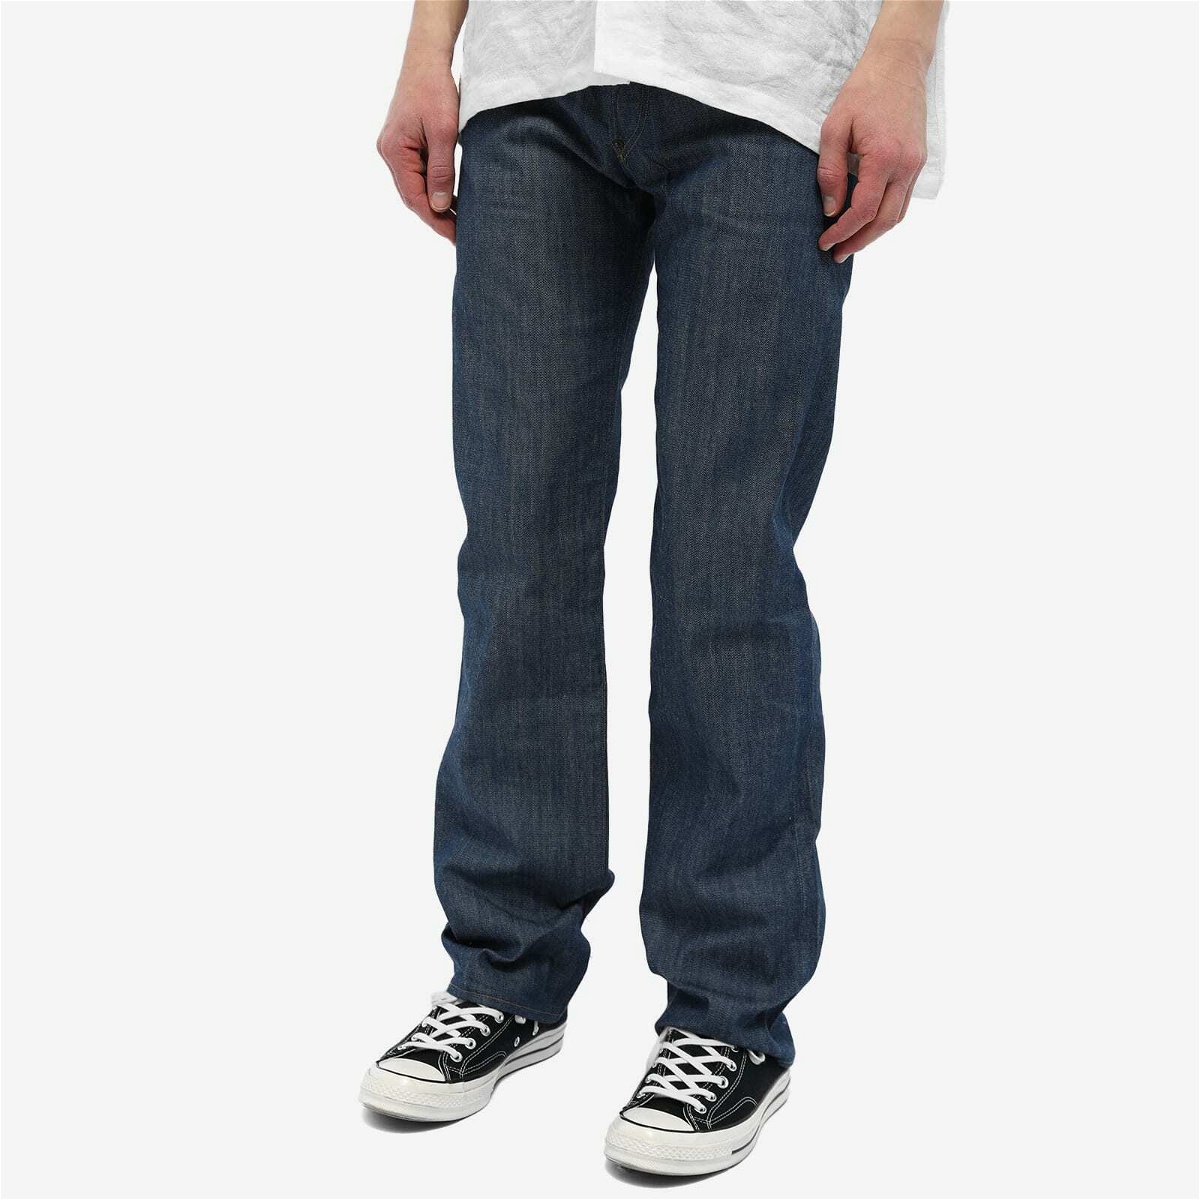 Men's American-Made Jeans - Crafted in Cone White Oak Selvedge Denim